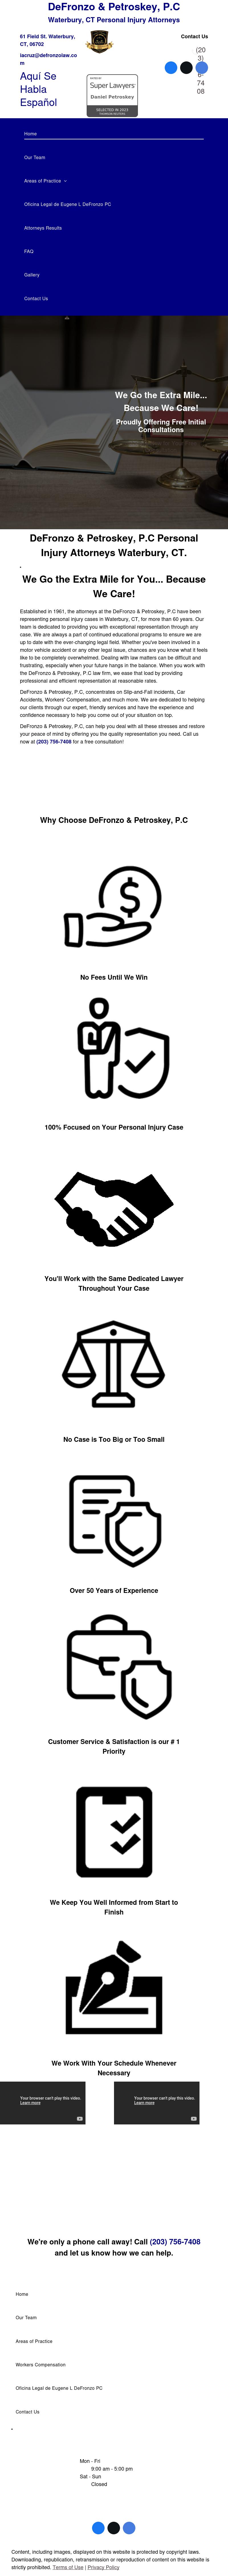 24/7 Legal - Waterbury CT Lawyers